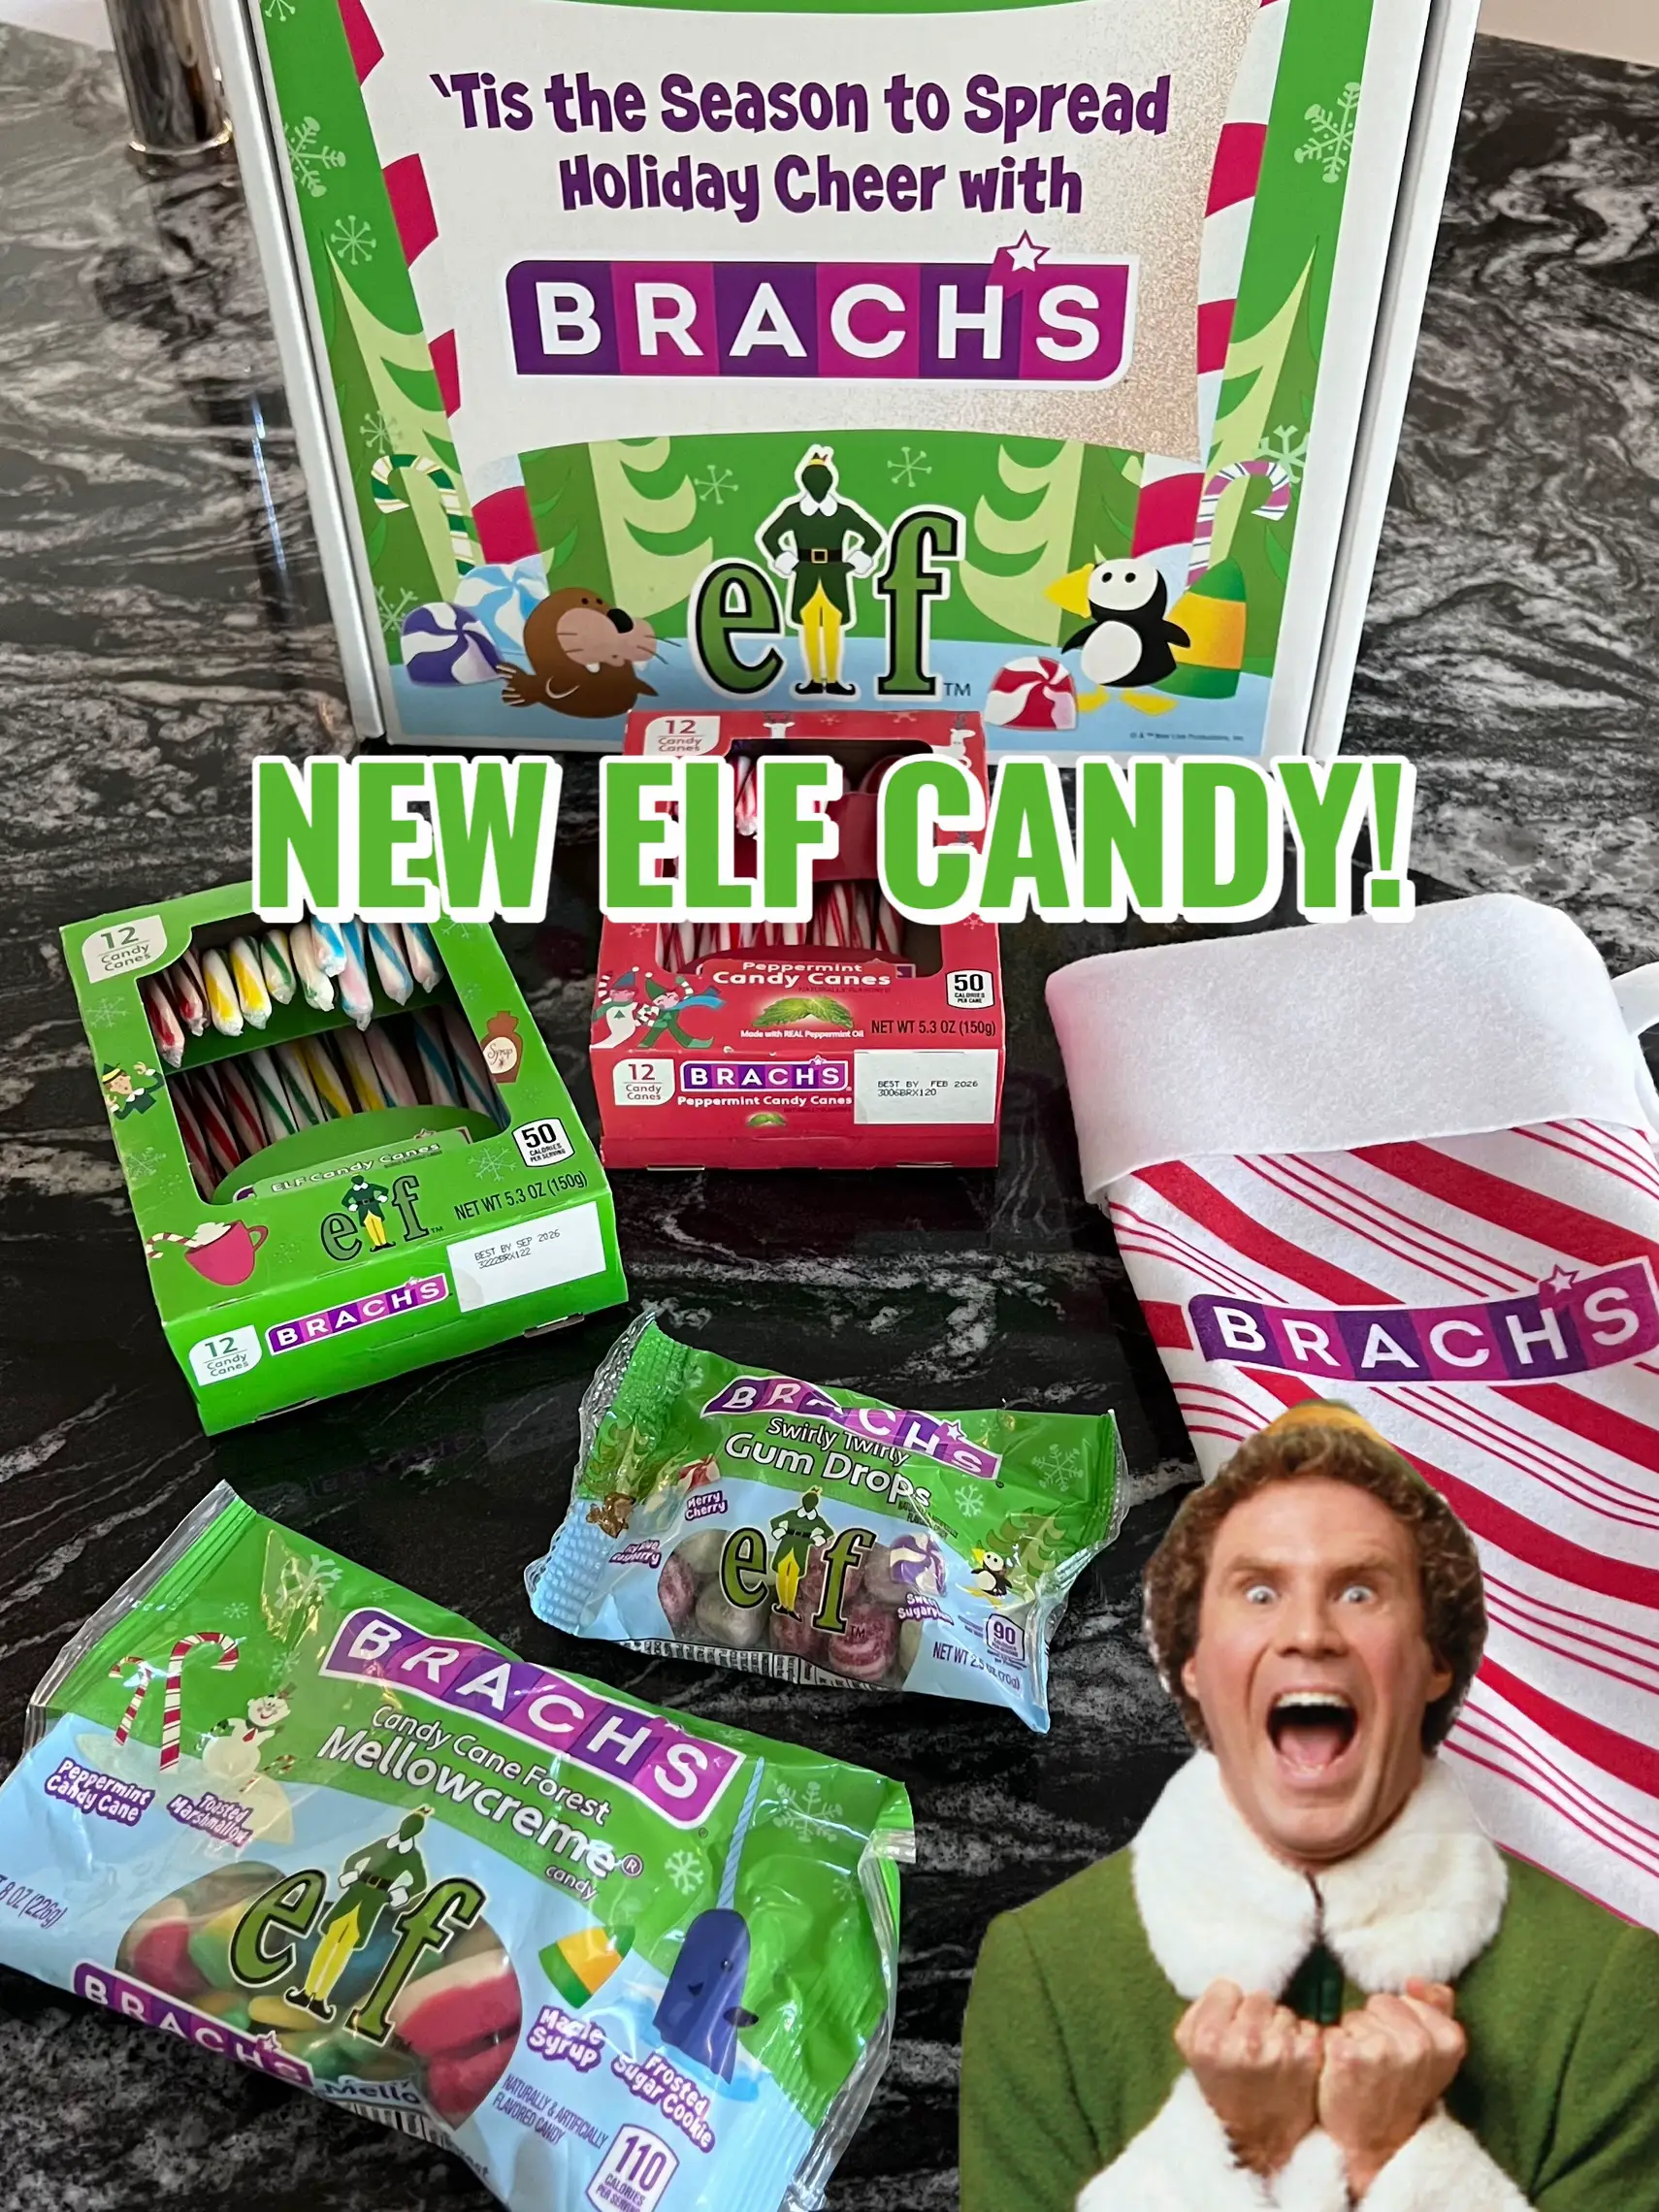 Brach's Elf Candy Cane Forest Mellowcremes -8oz bag